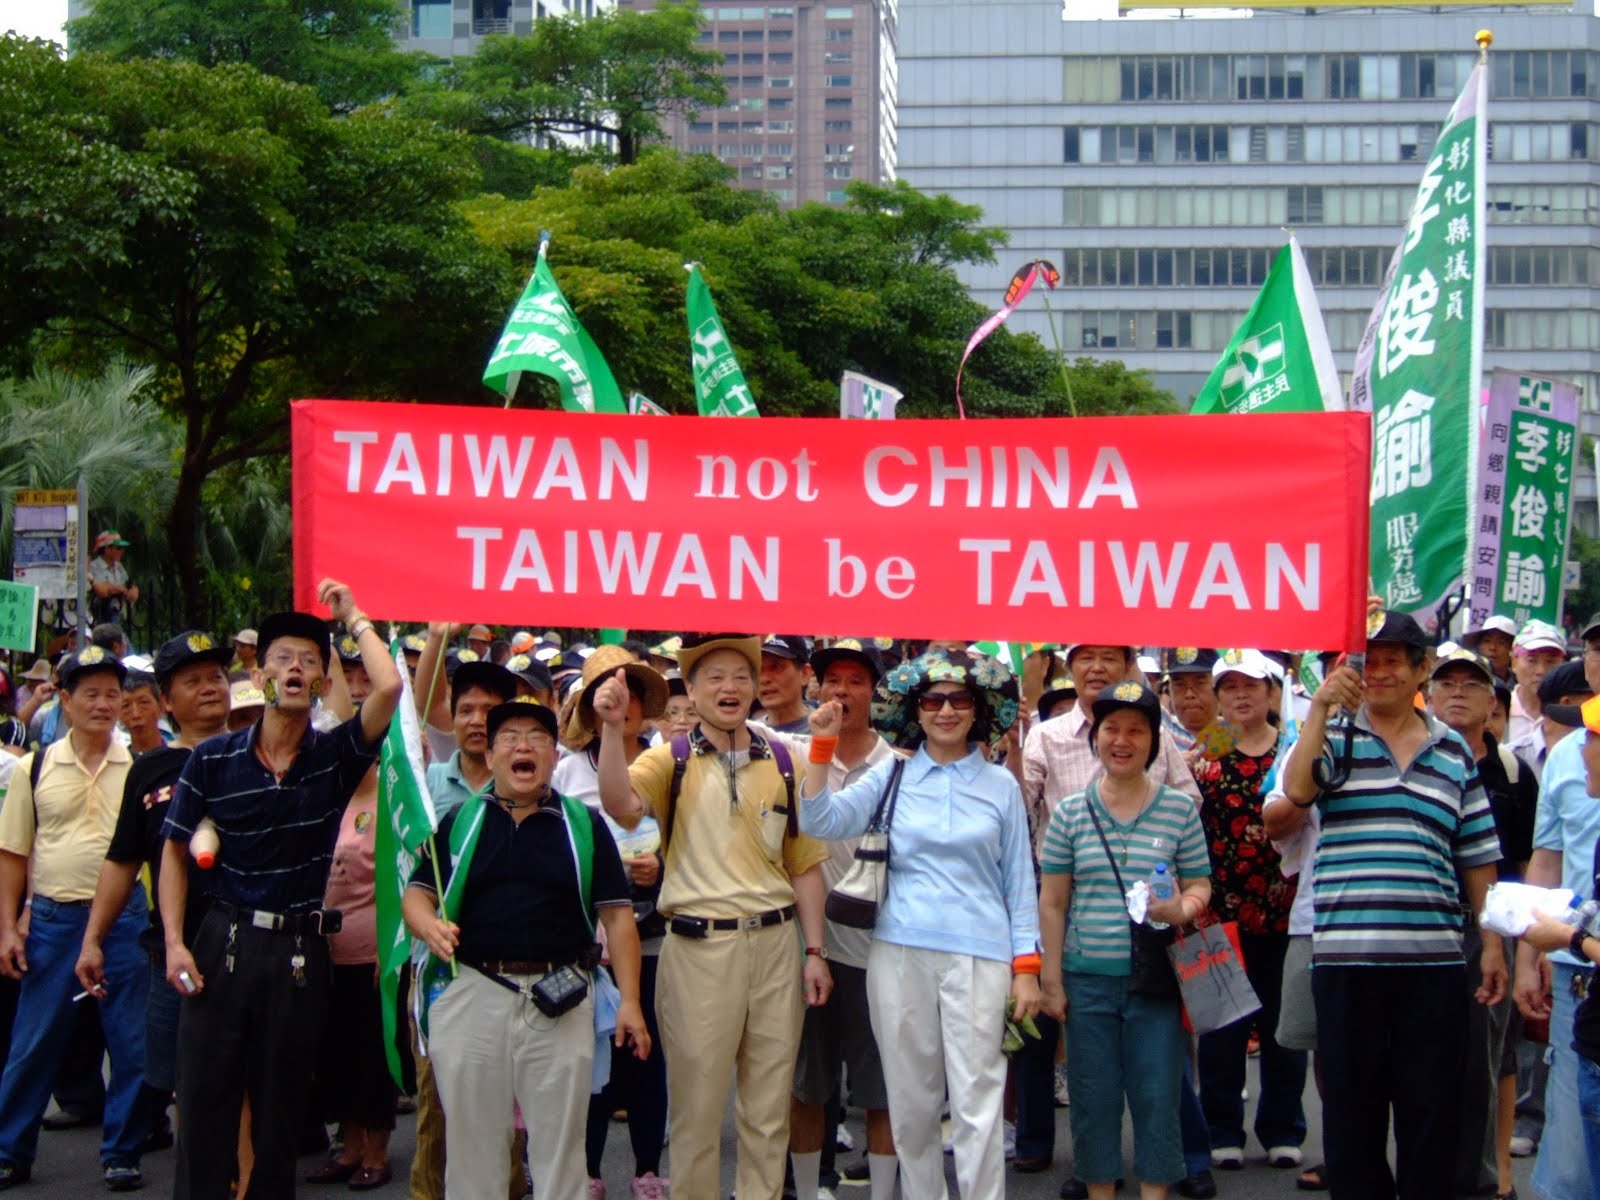 Republic Taiwan independence, Taiwan is not part of china, Taiwan be Taiwan